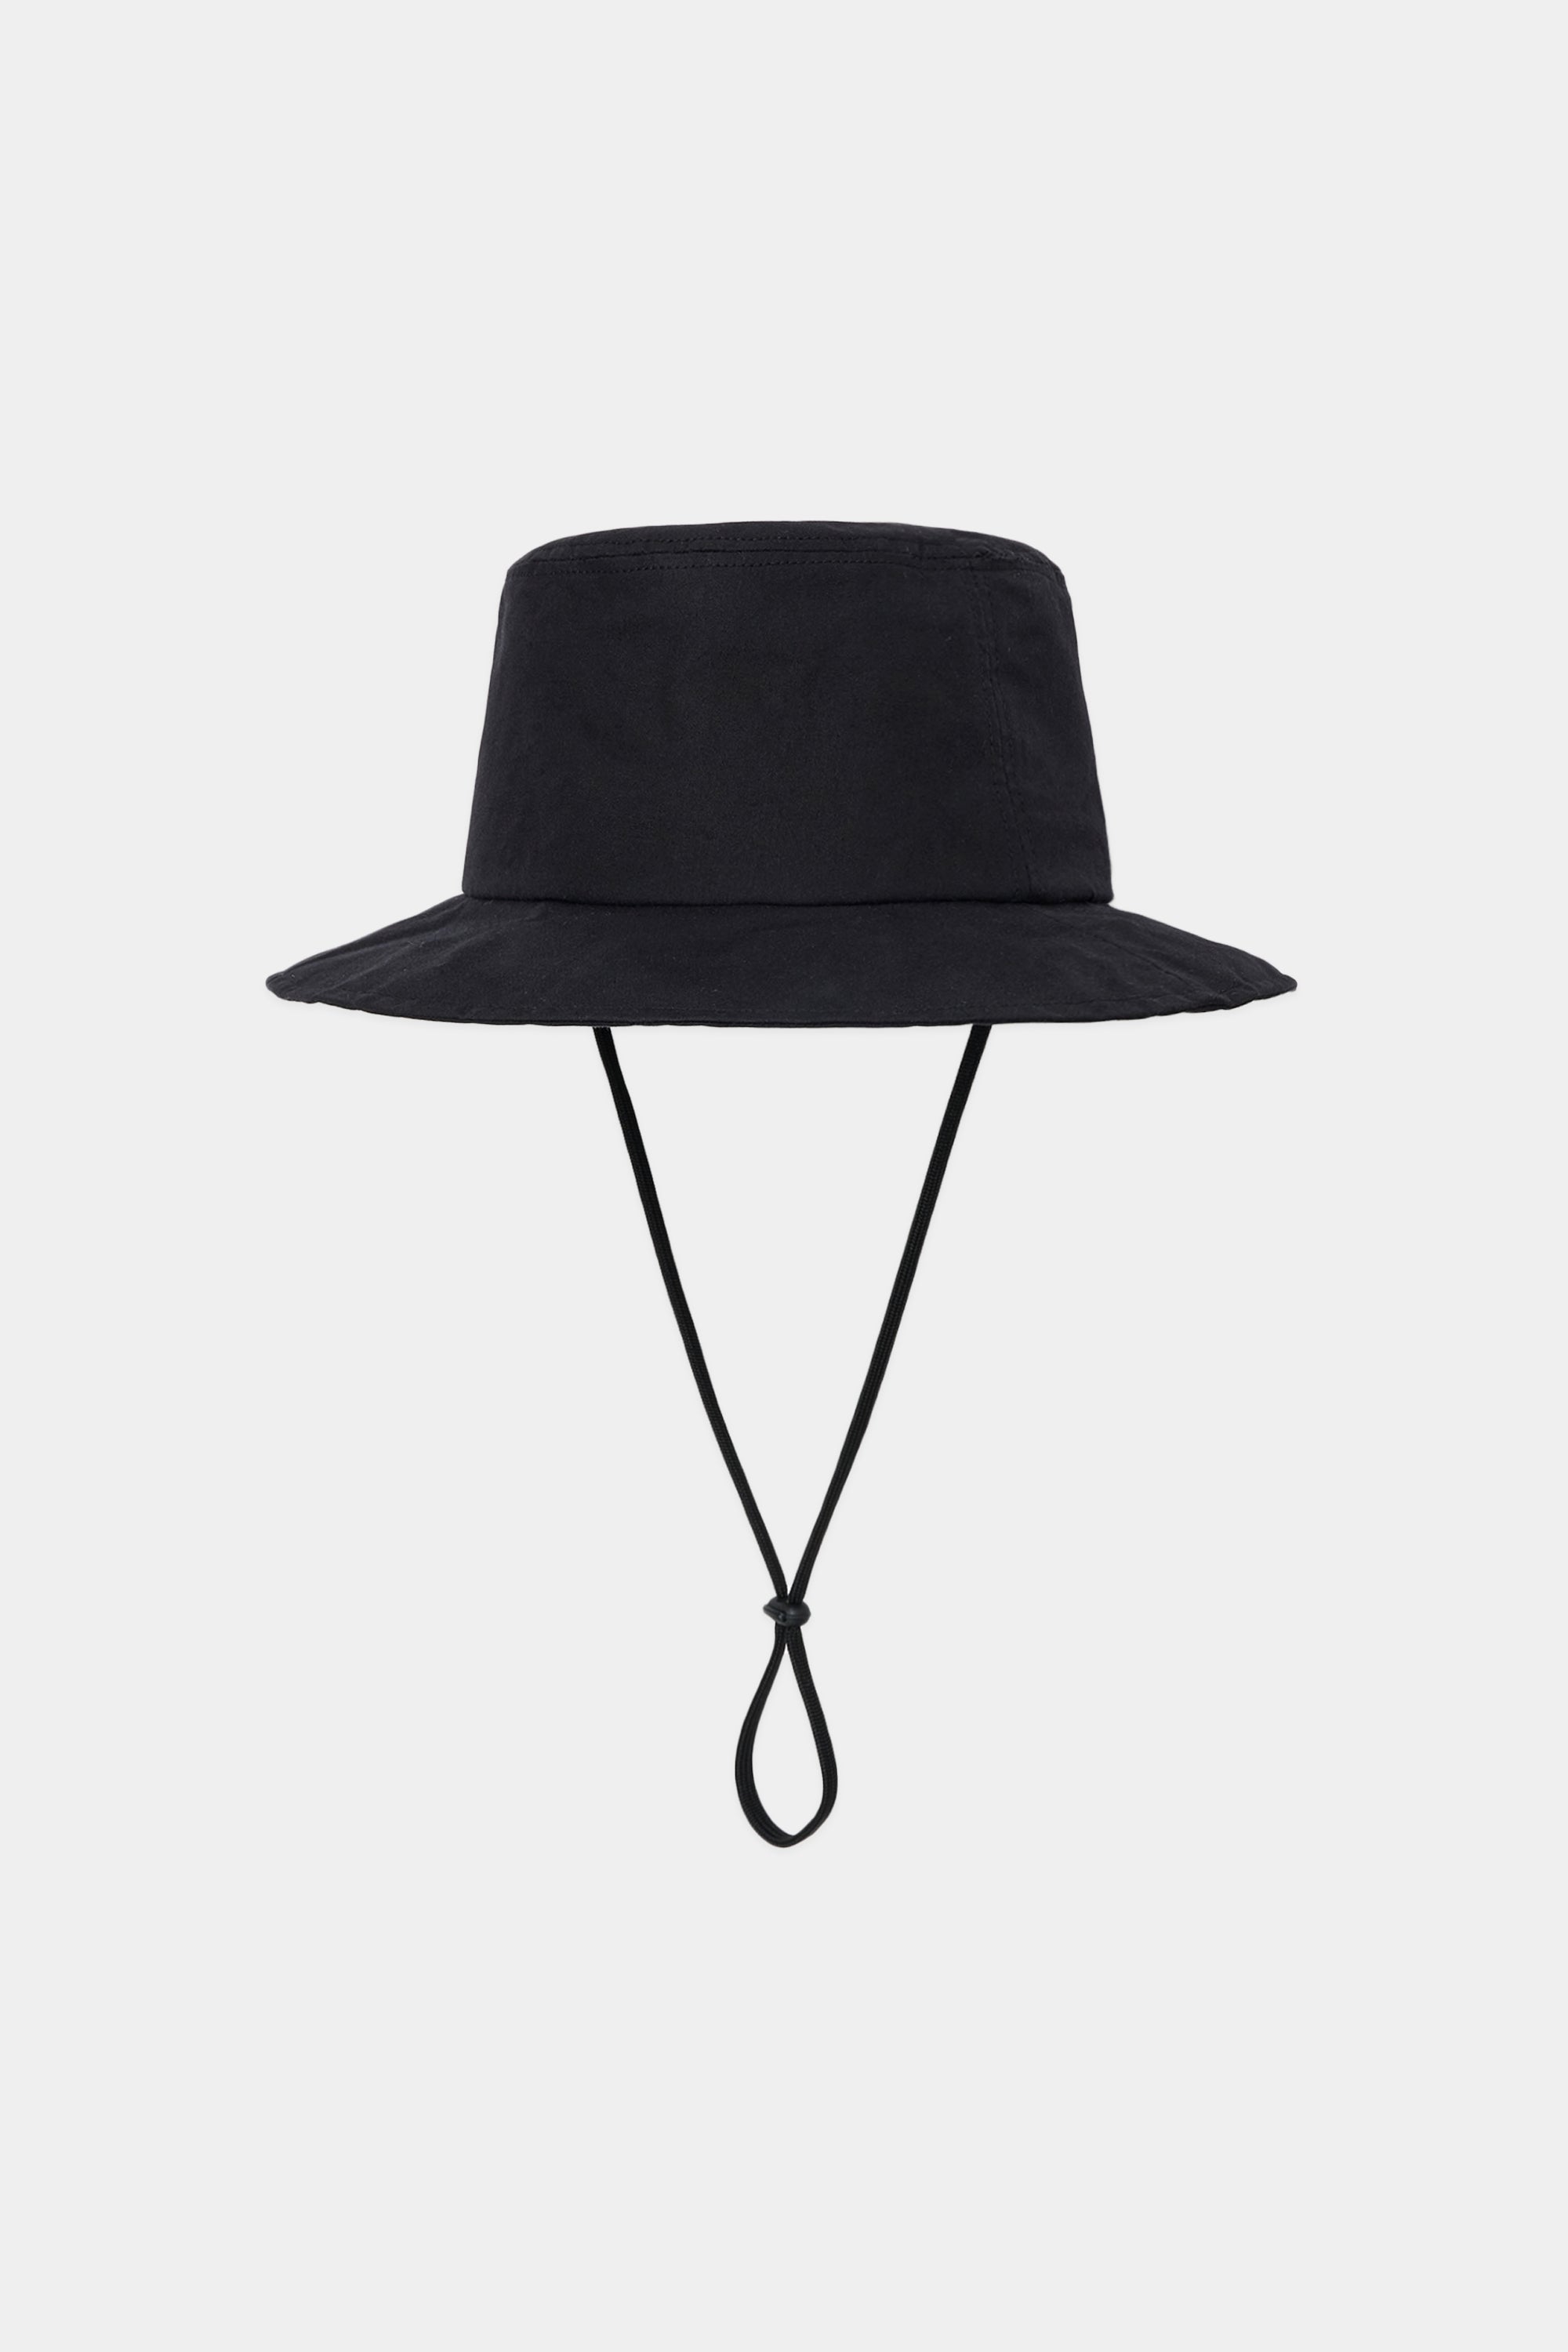 ORGANIC COTTON ALL WEATHER CLOTH STORM HAT, Black